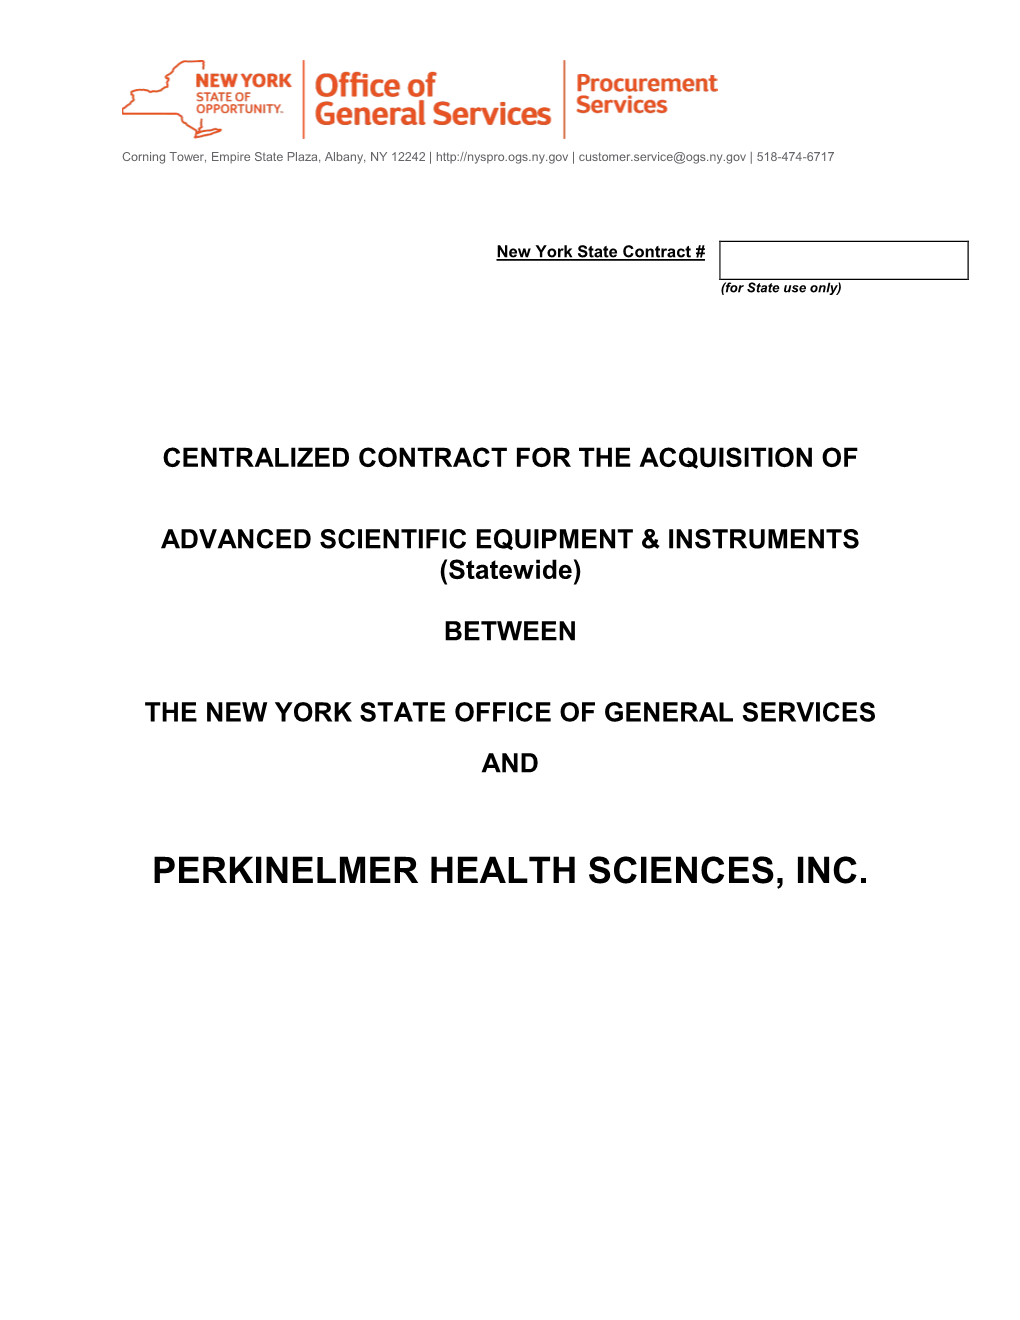 Perkinelmer Health Sciences, Inc